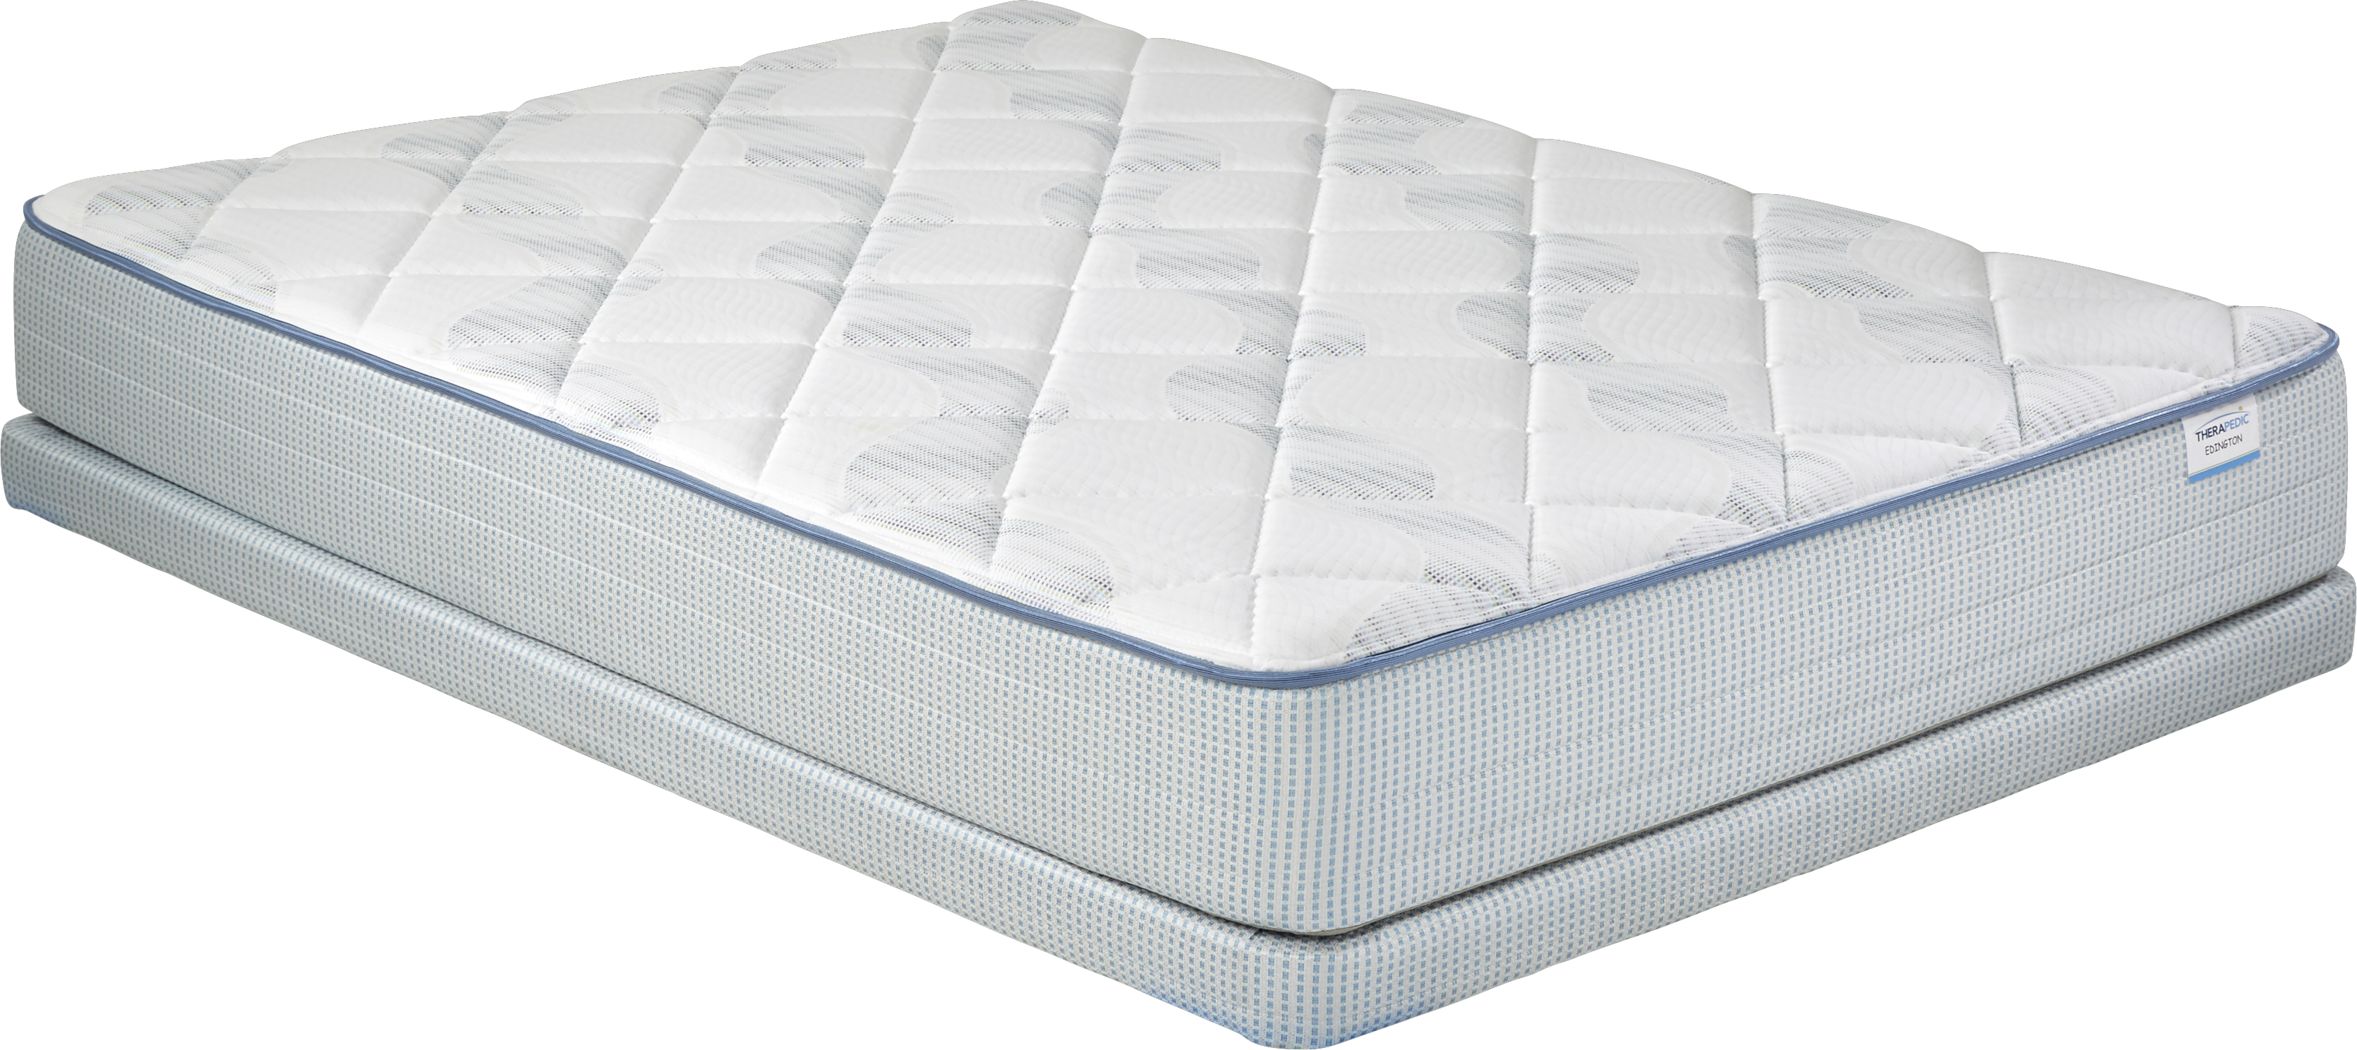 therapedic chesire low profile queen mattress set